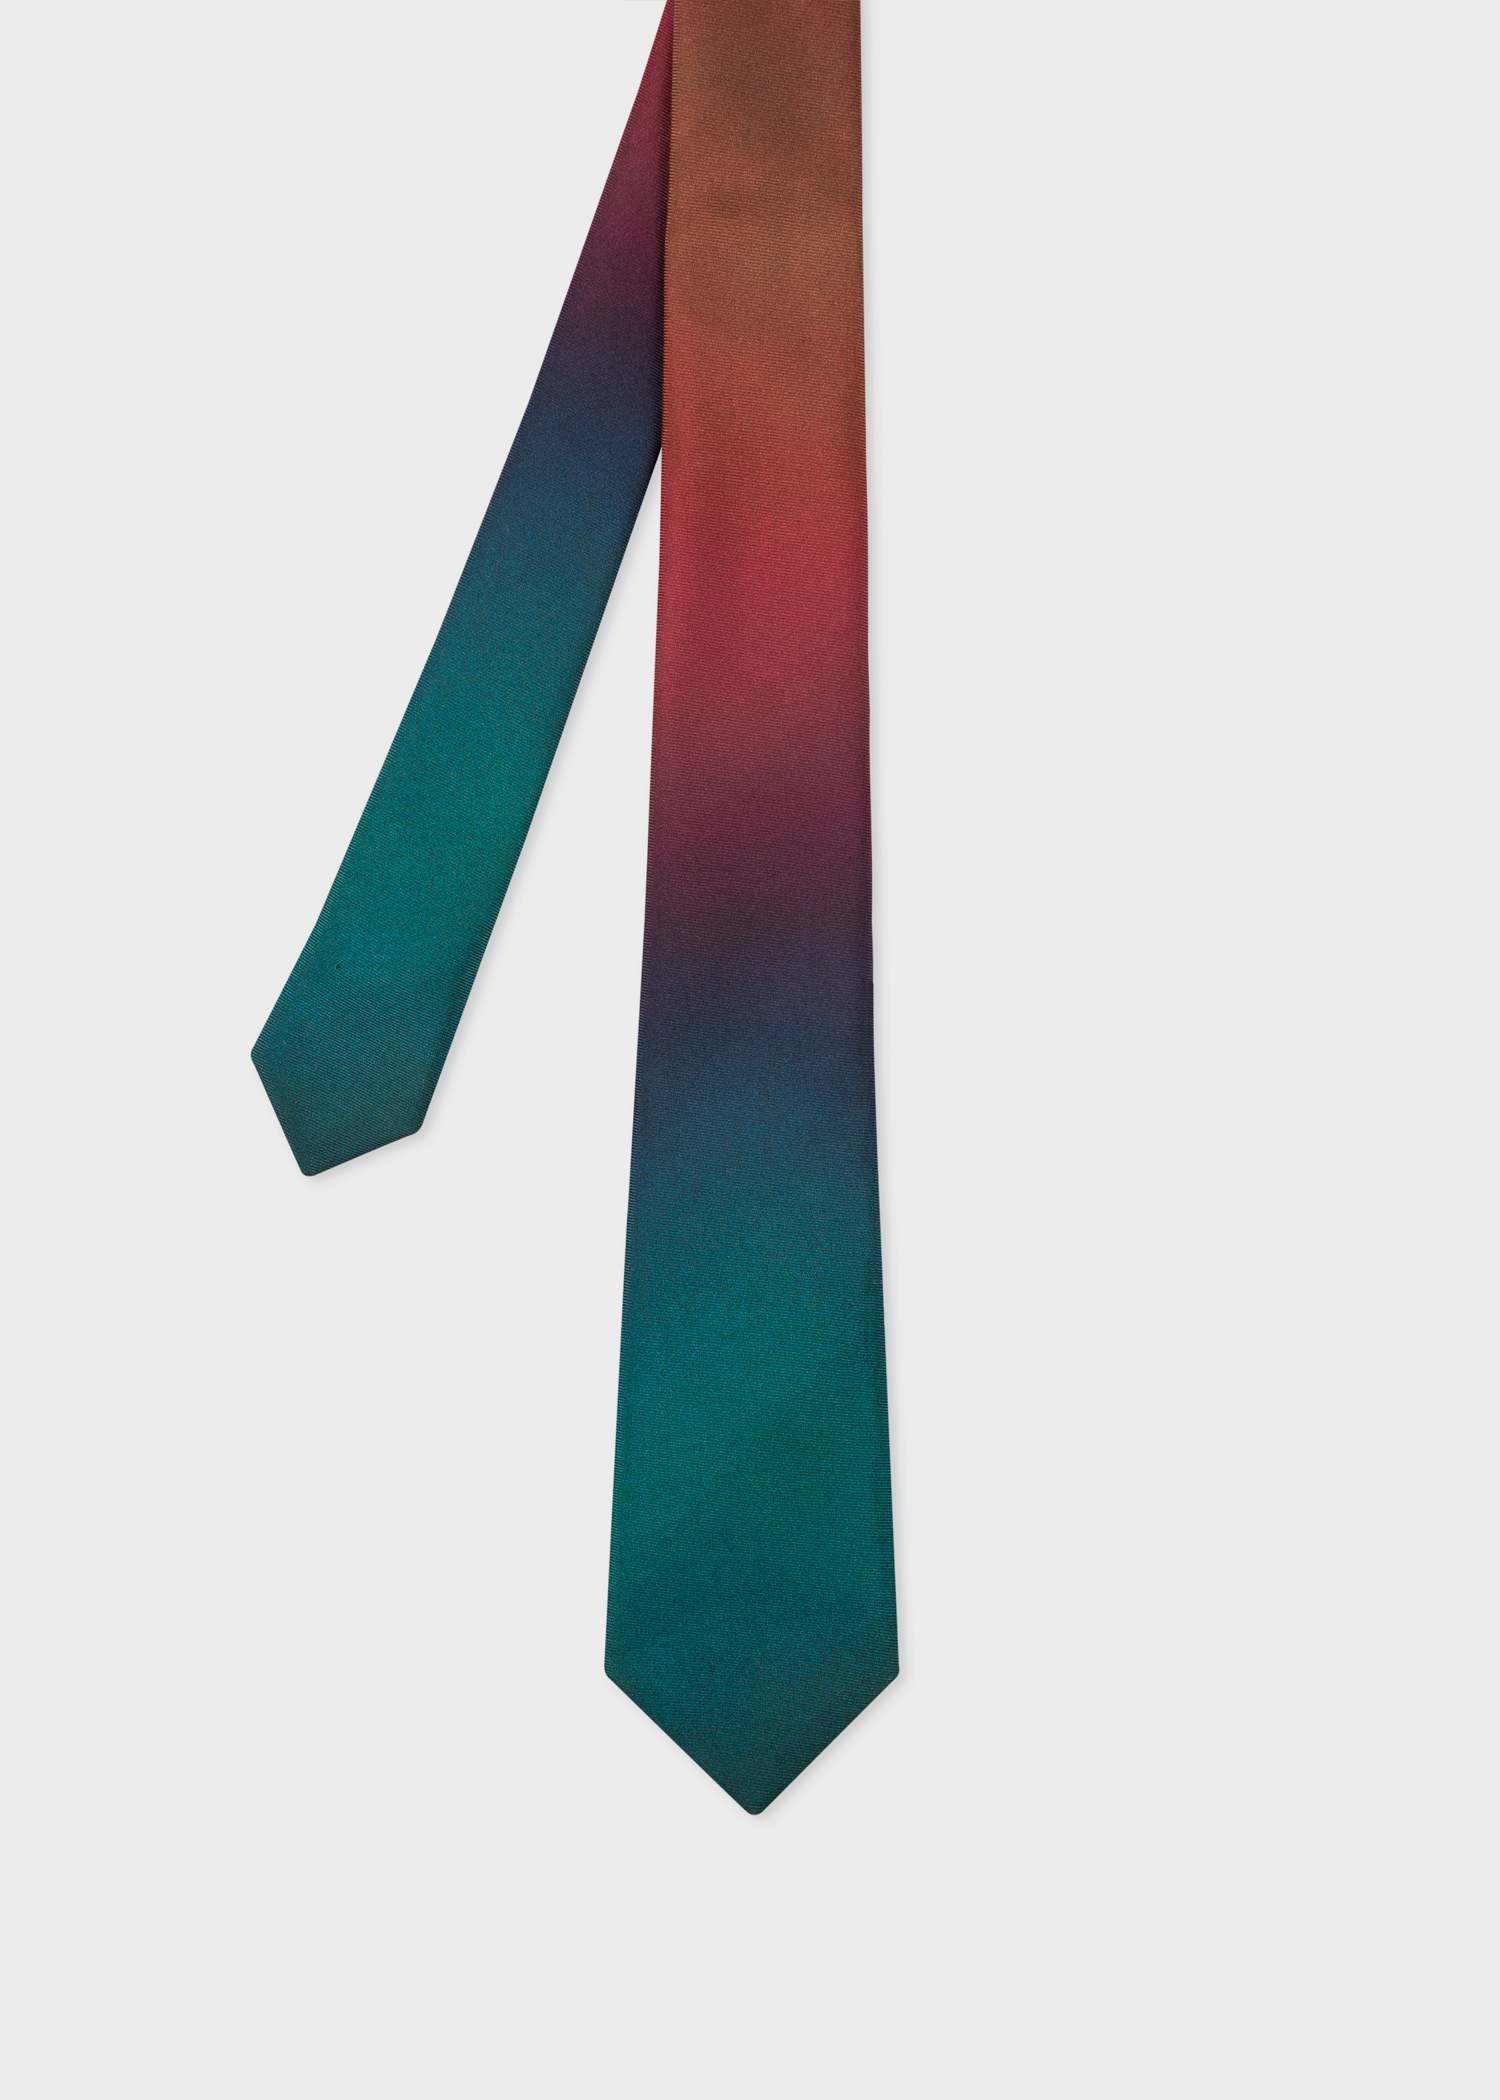 Front View - Men's Multi-Coloured Gradient Narrow Silk Tie Paul Smith